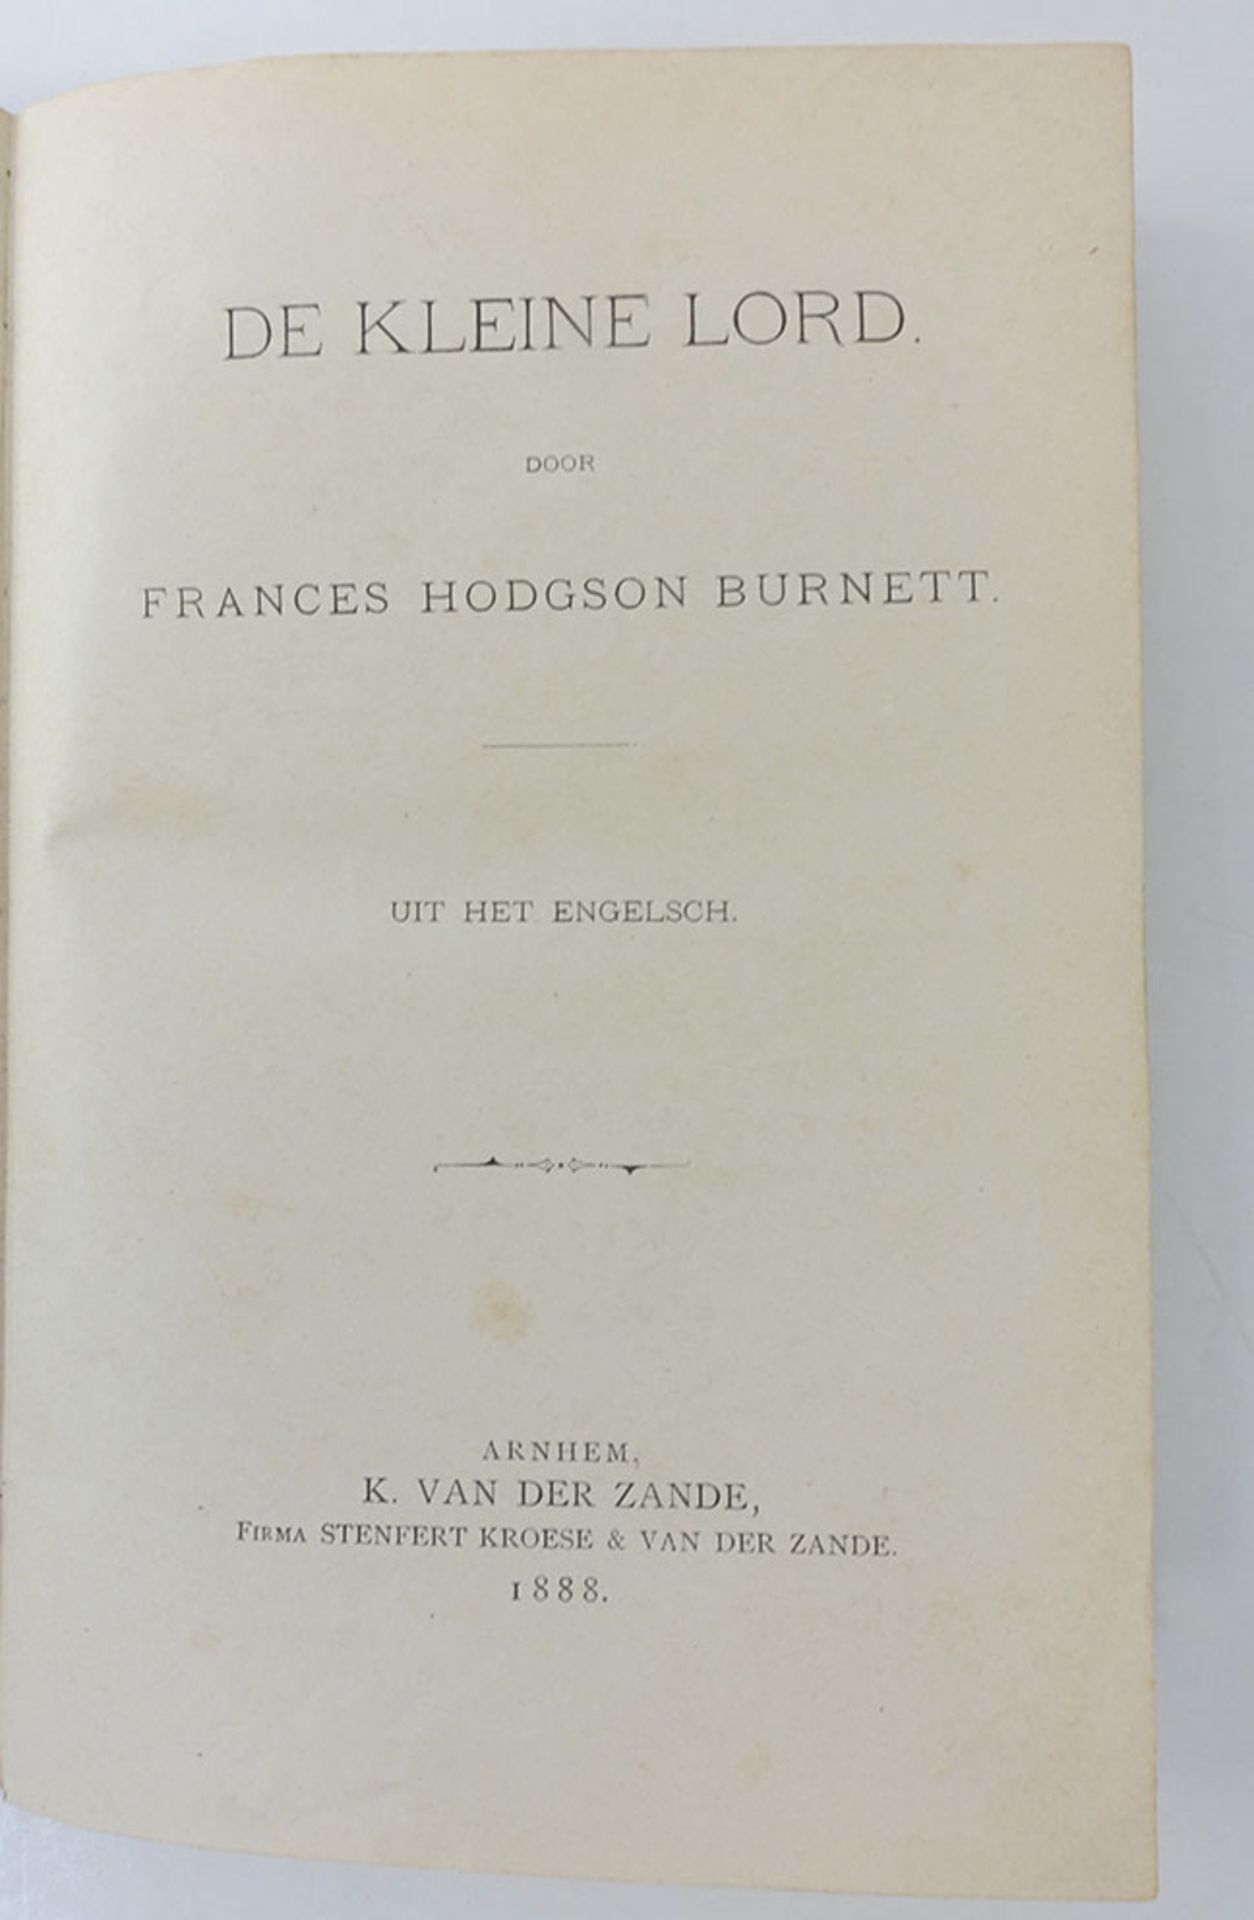 BURNETT, F.H. De kleine lord. Arnhem, 1888. (4), 288 pp. Cont. hcl. - First translation in Dutch.